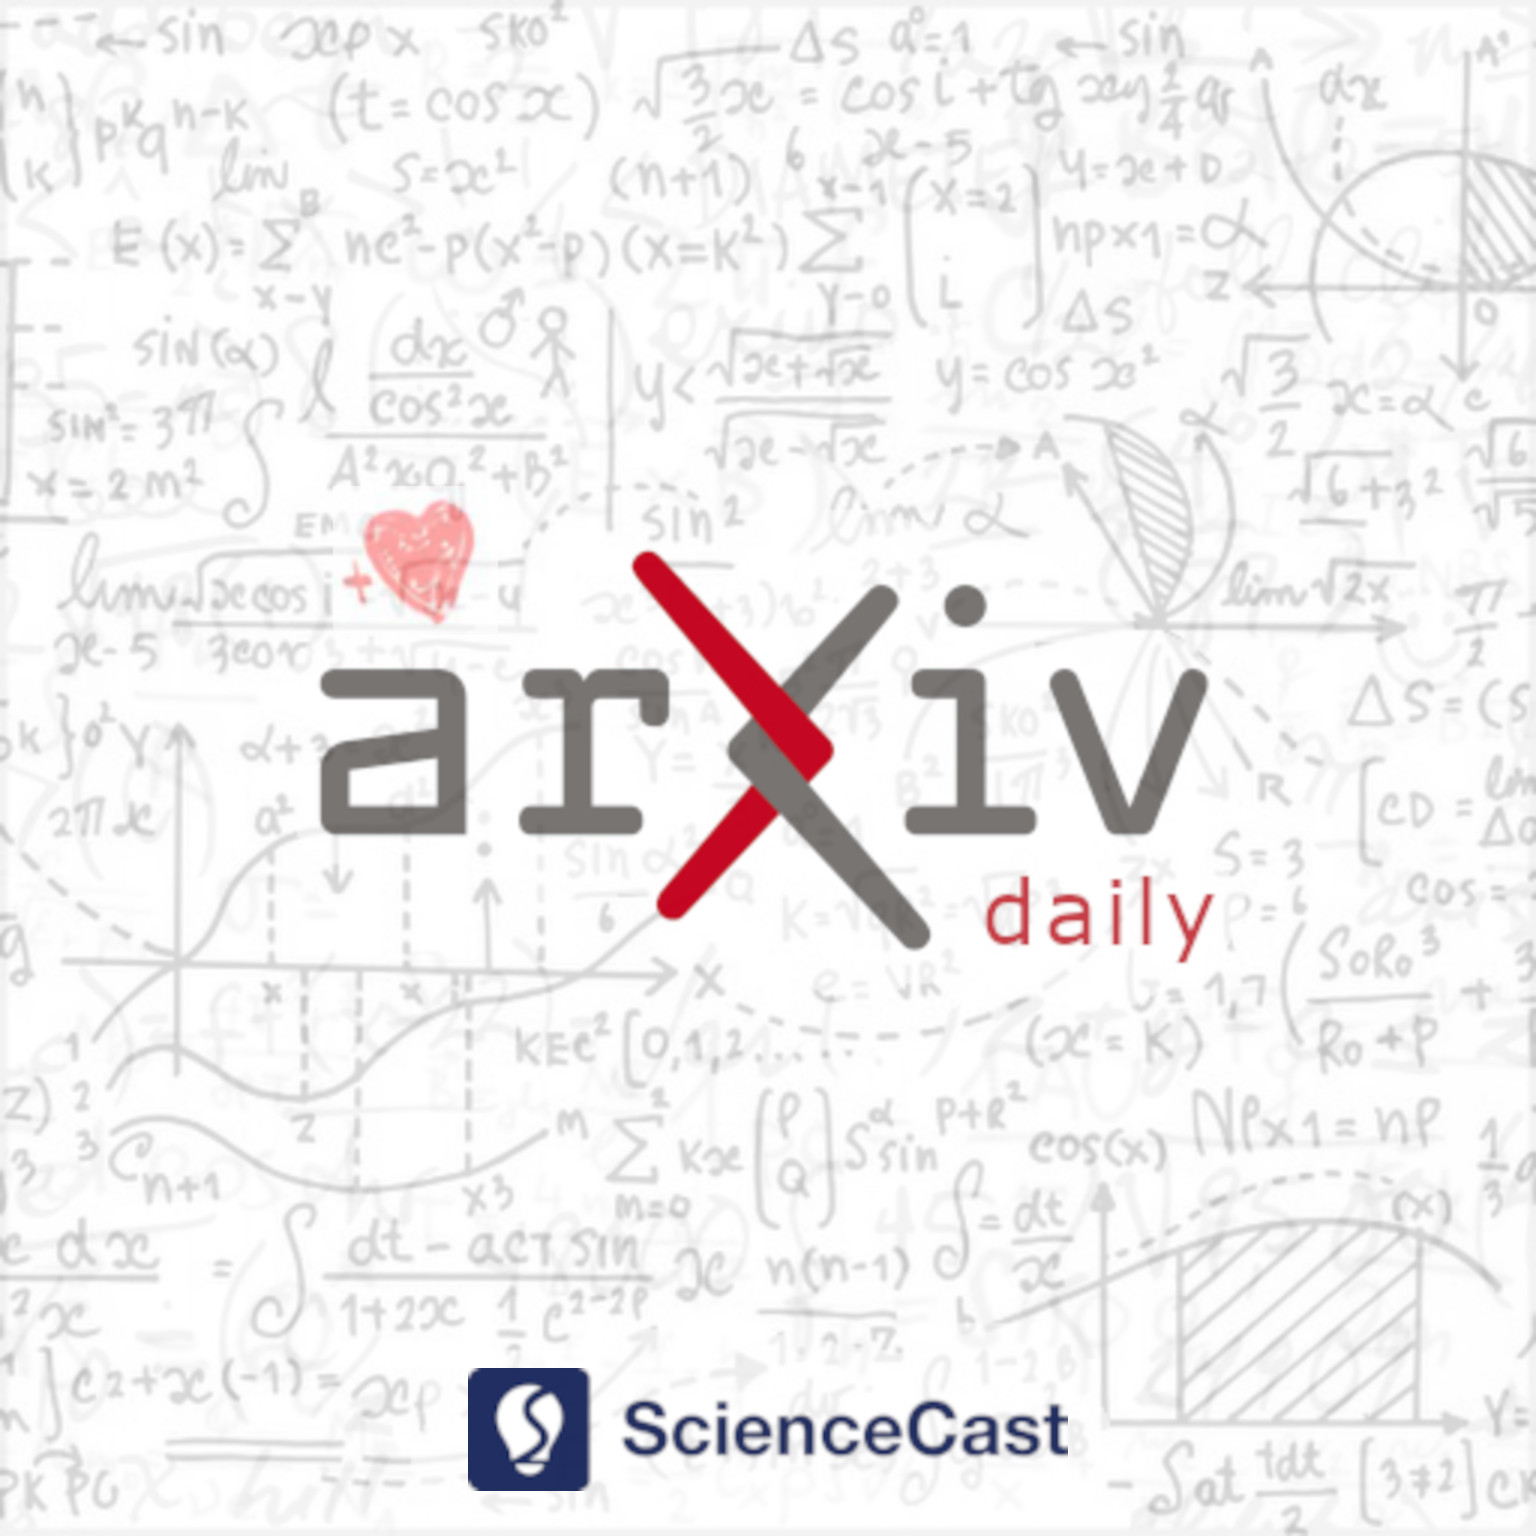 arXiv daily: Mathematical Finance